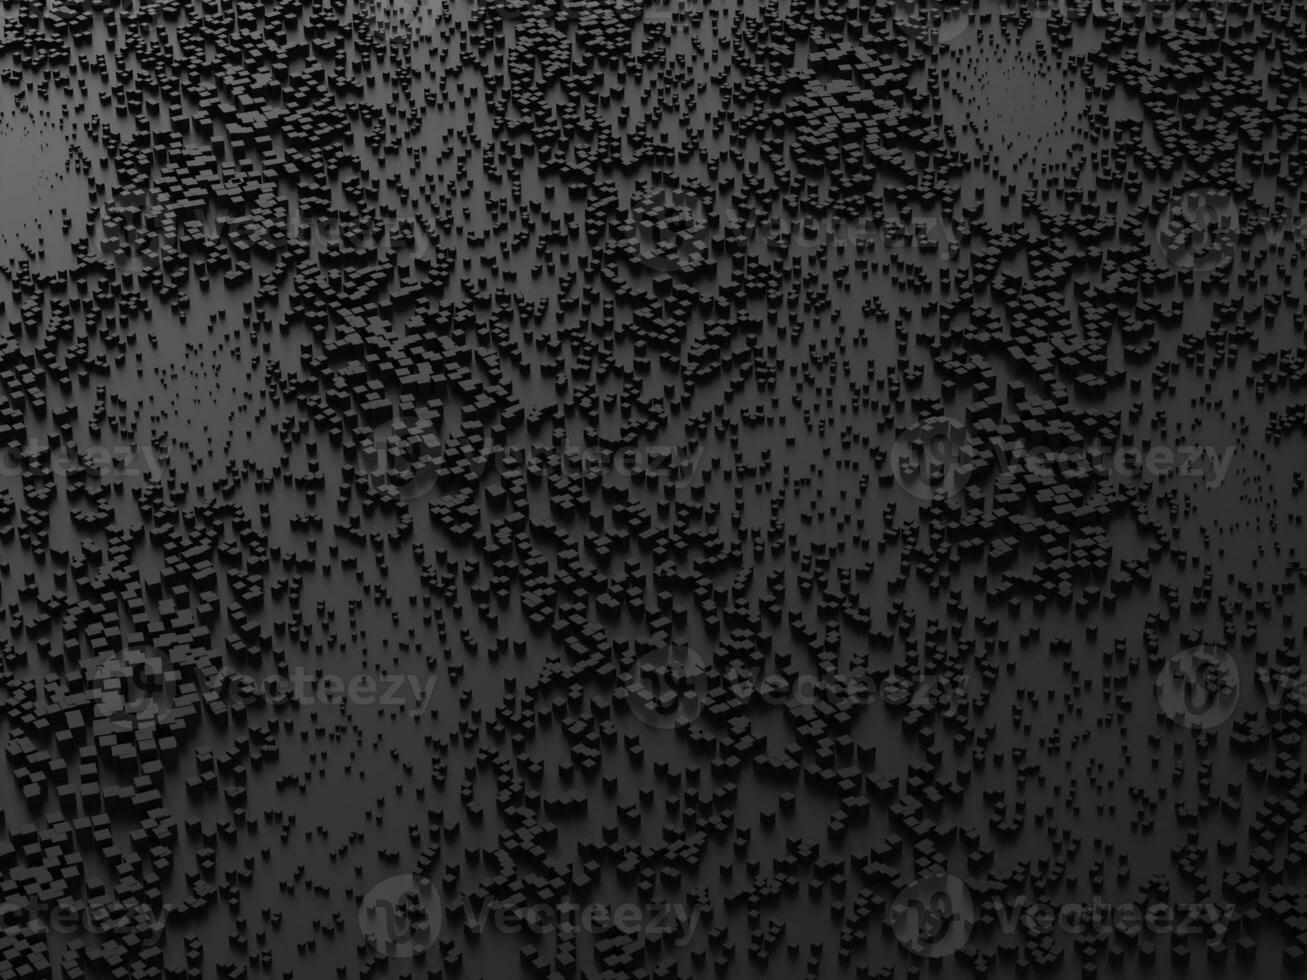 abstrakt kub stad - svart miljö - 3d illustration foto